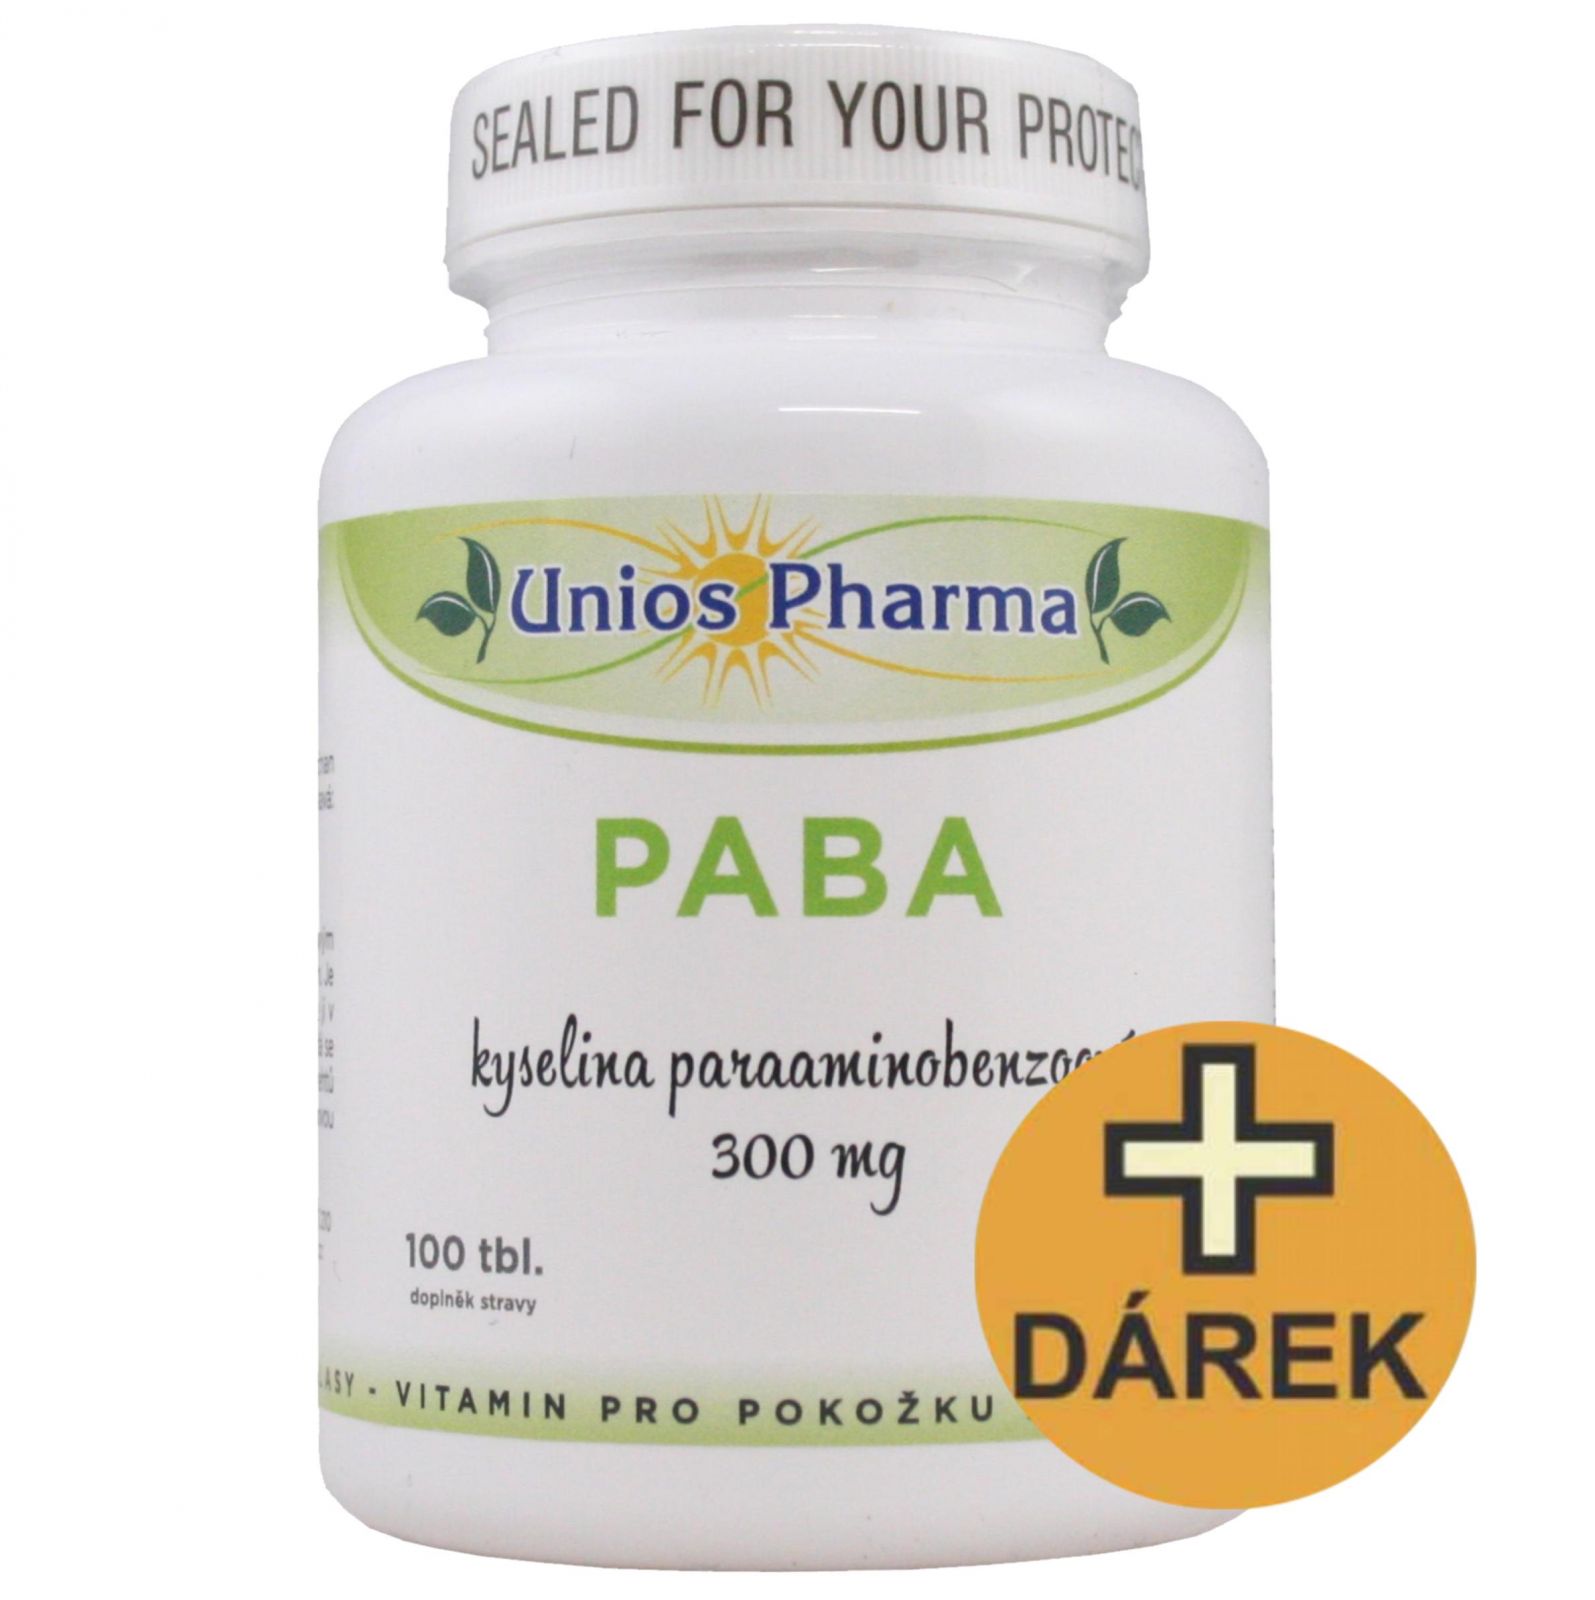  Unios Pharma PABA 300 mg ─ 100 tablet 